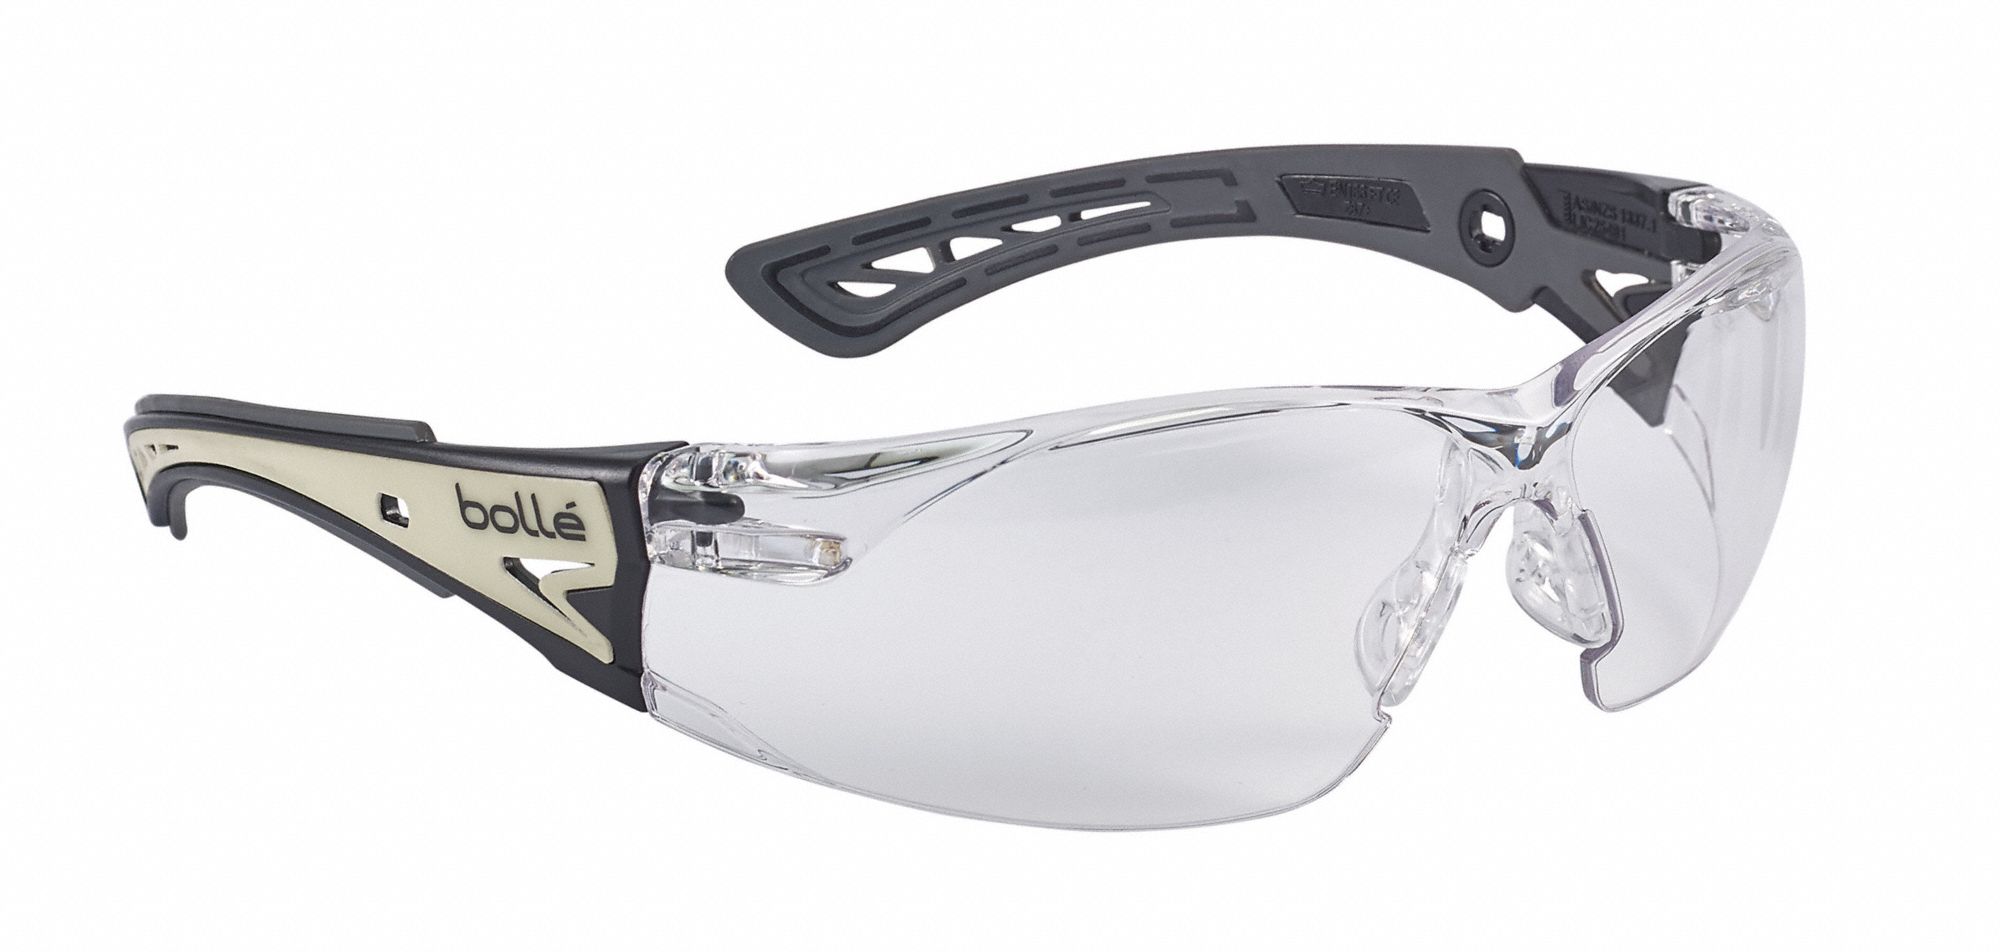 Bolle Safety Safety Glasses Anti Fog Anti Static Anti Scratch No Foam Lining Wraparound